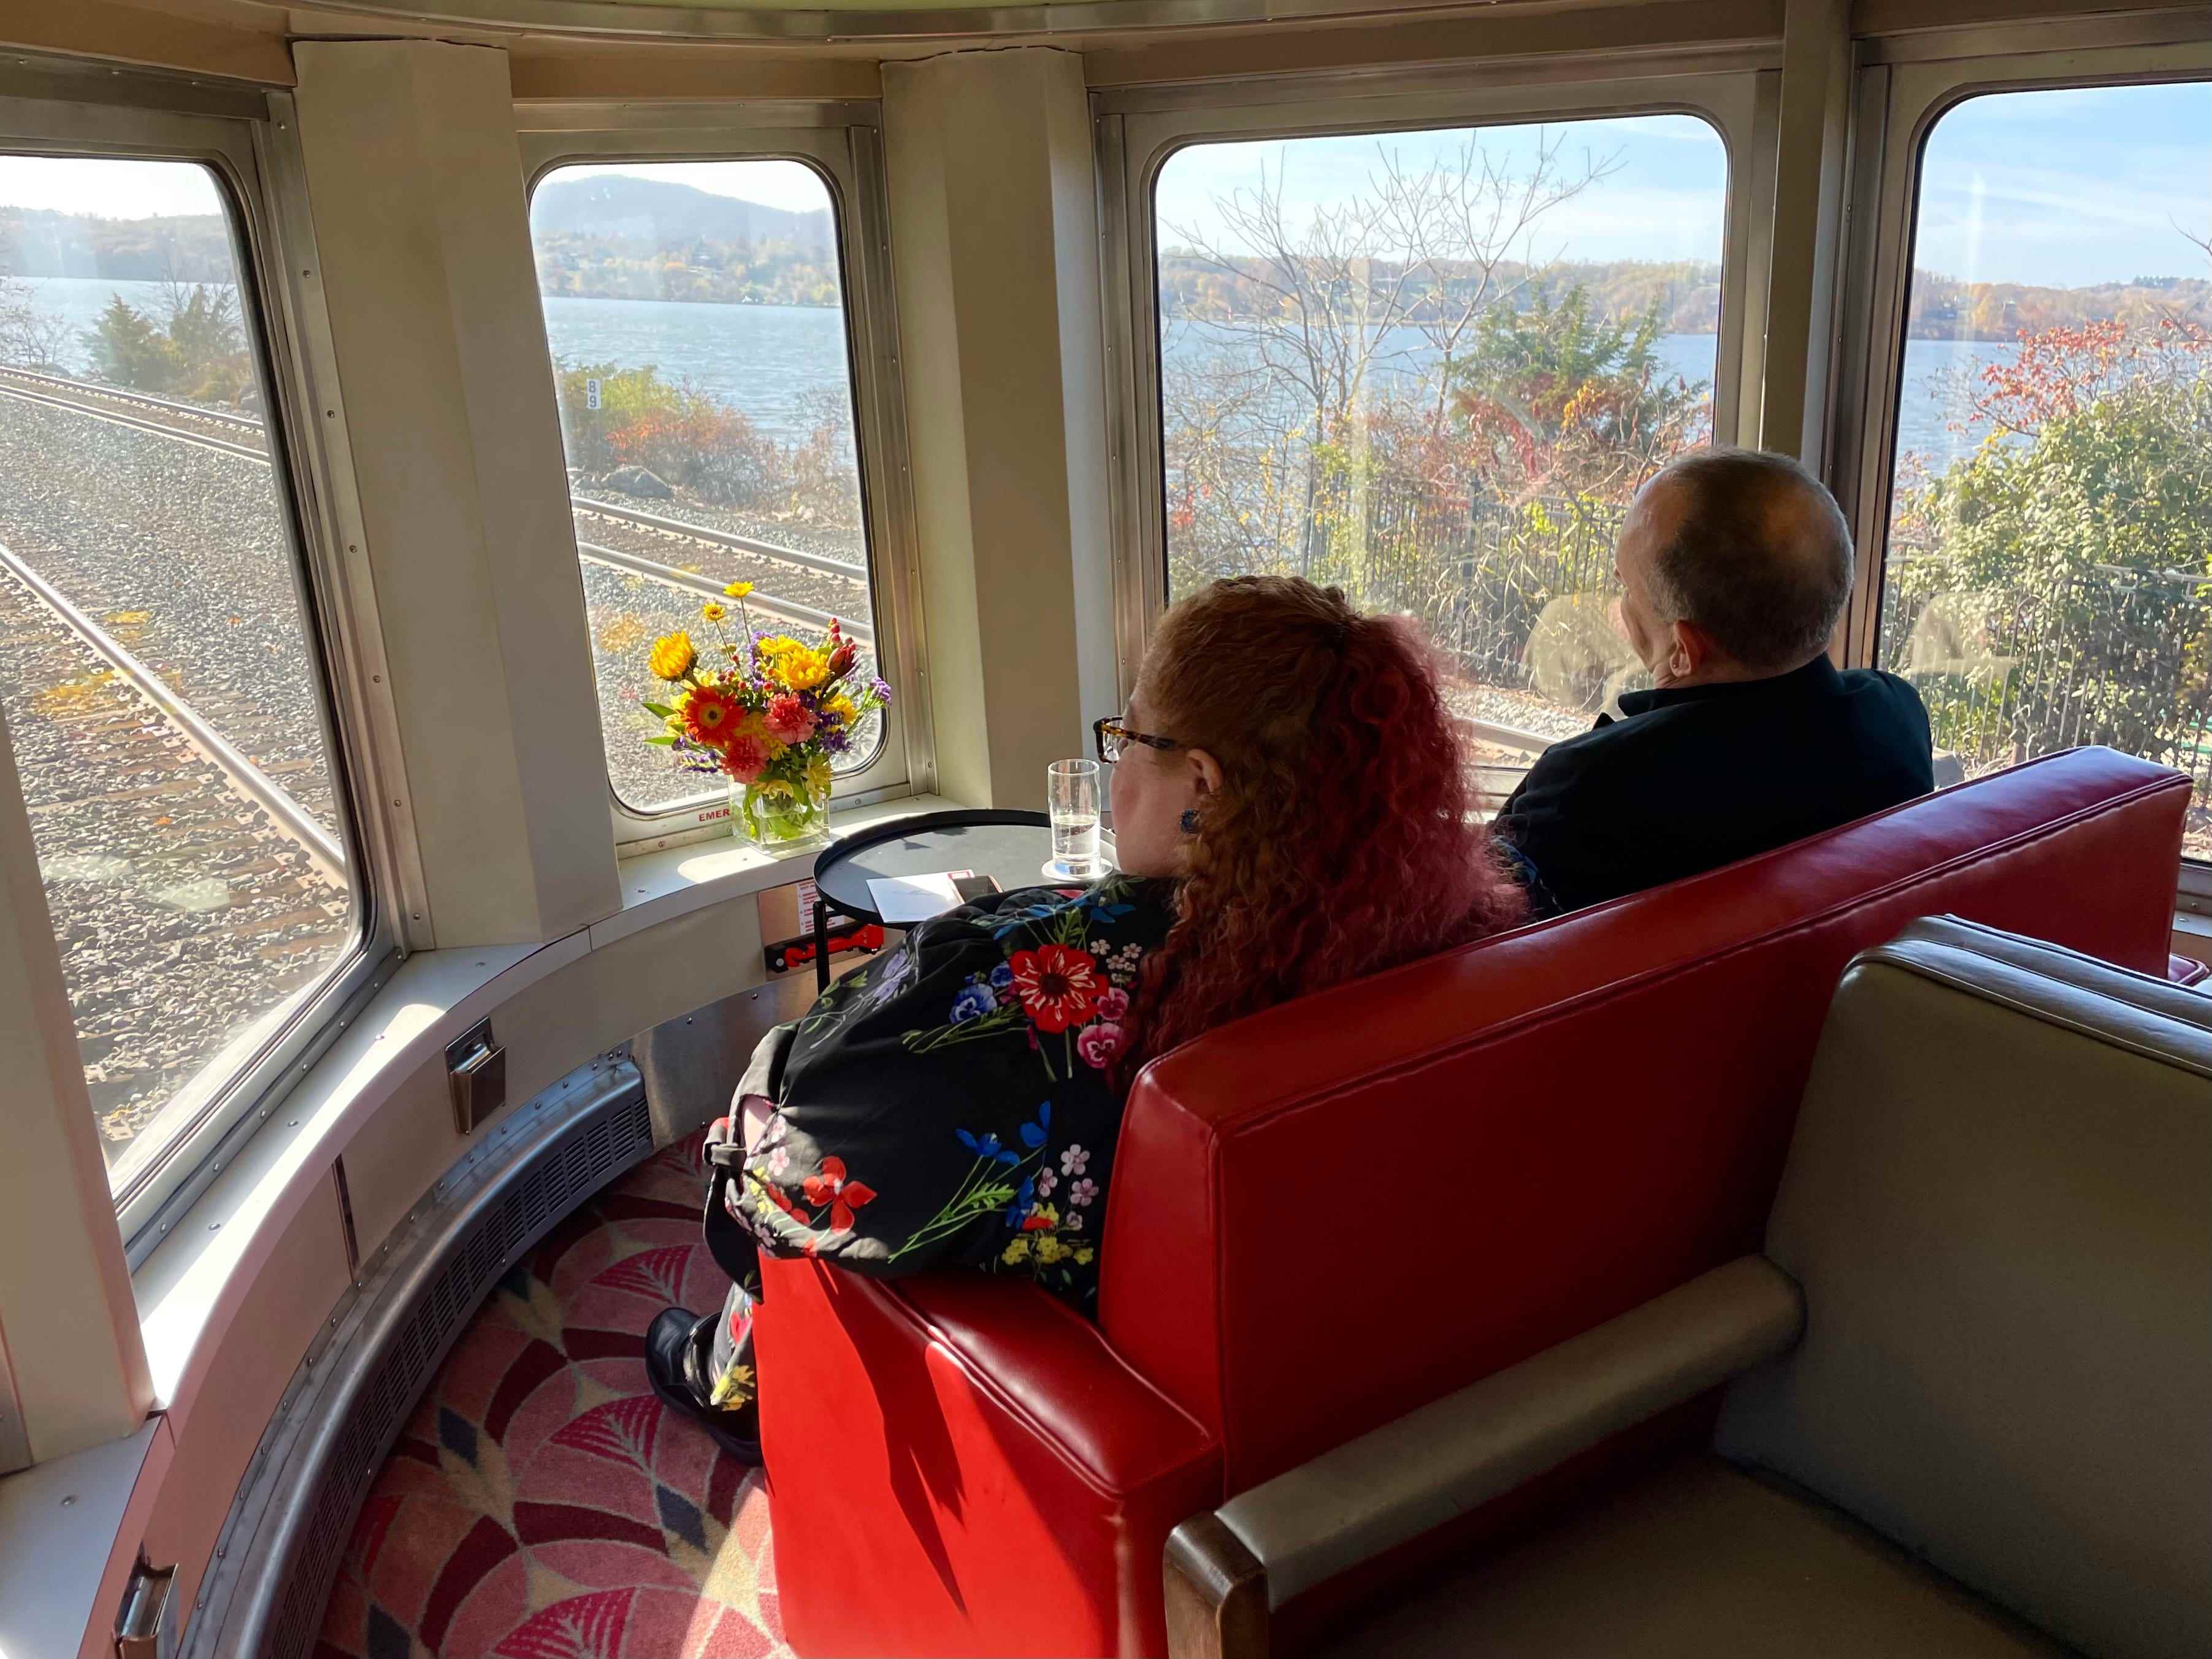 Hudson River Rail begrenzter Zug des 20. Jahrhunderts